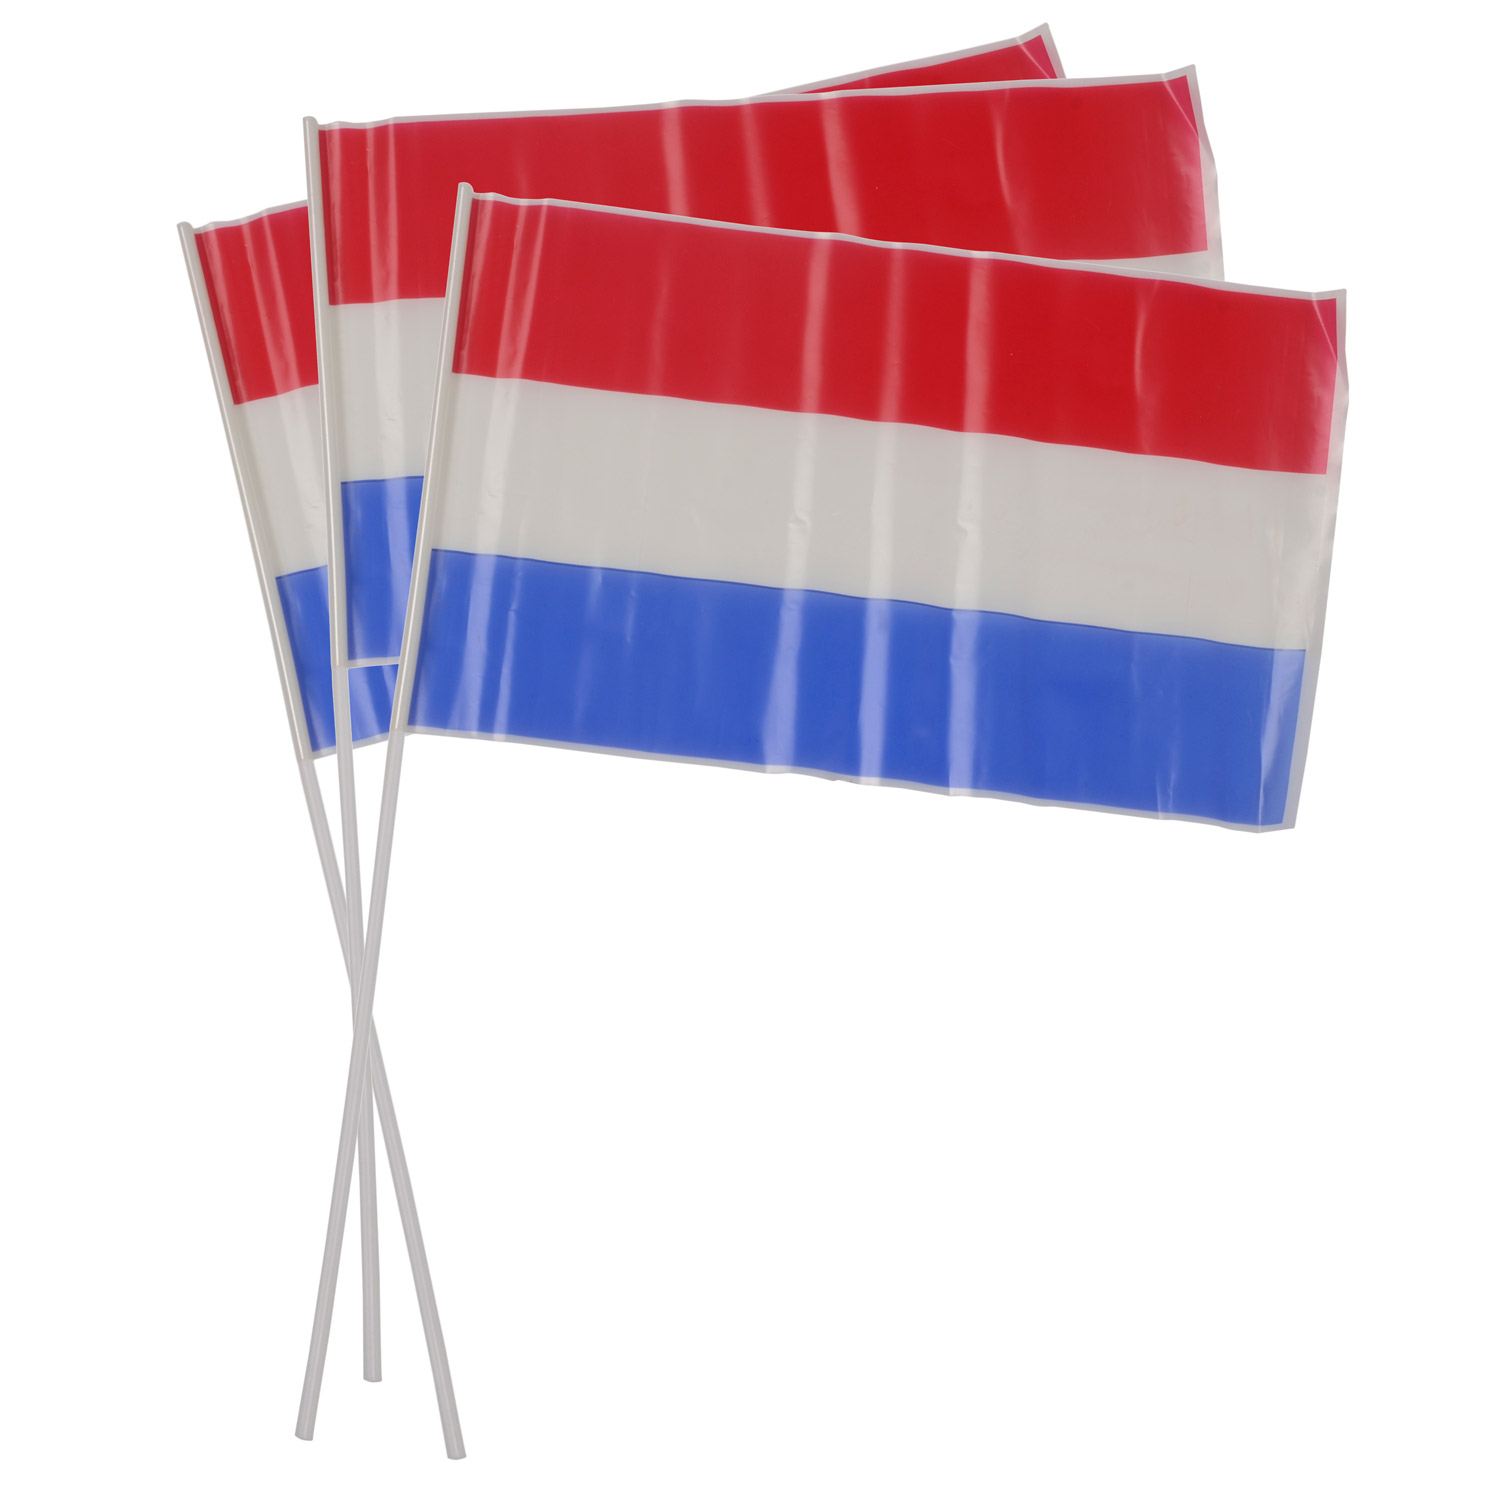 Handvlag Holland